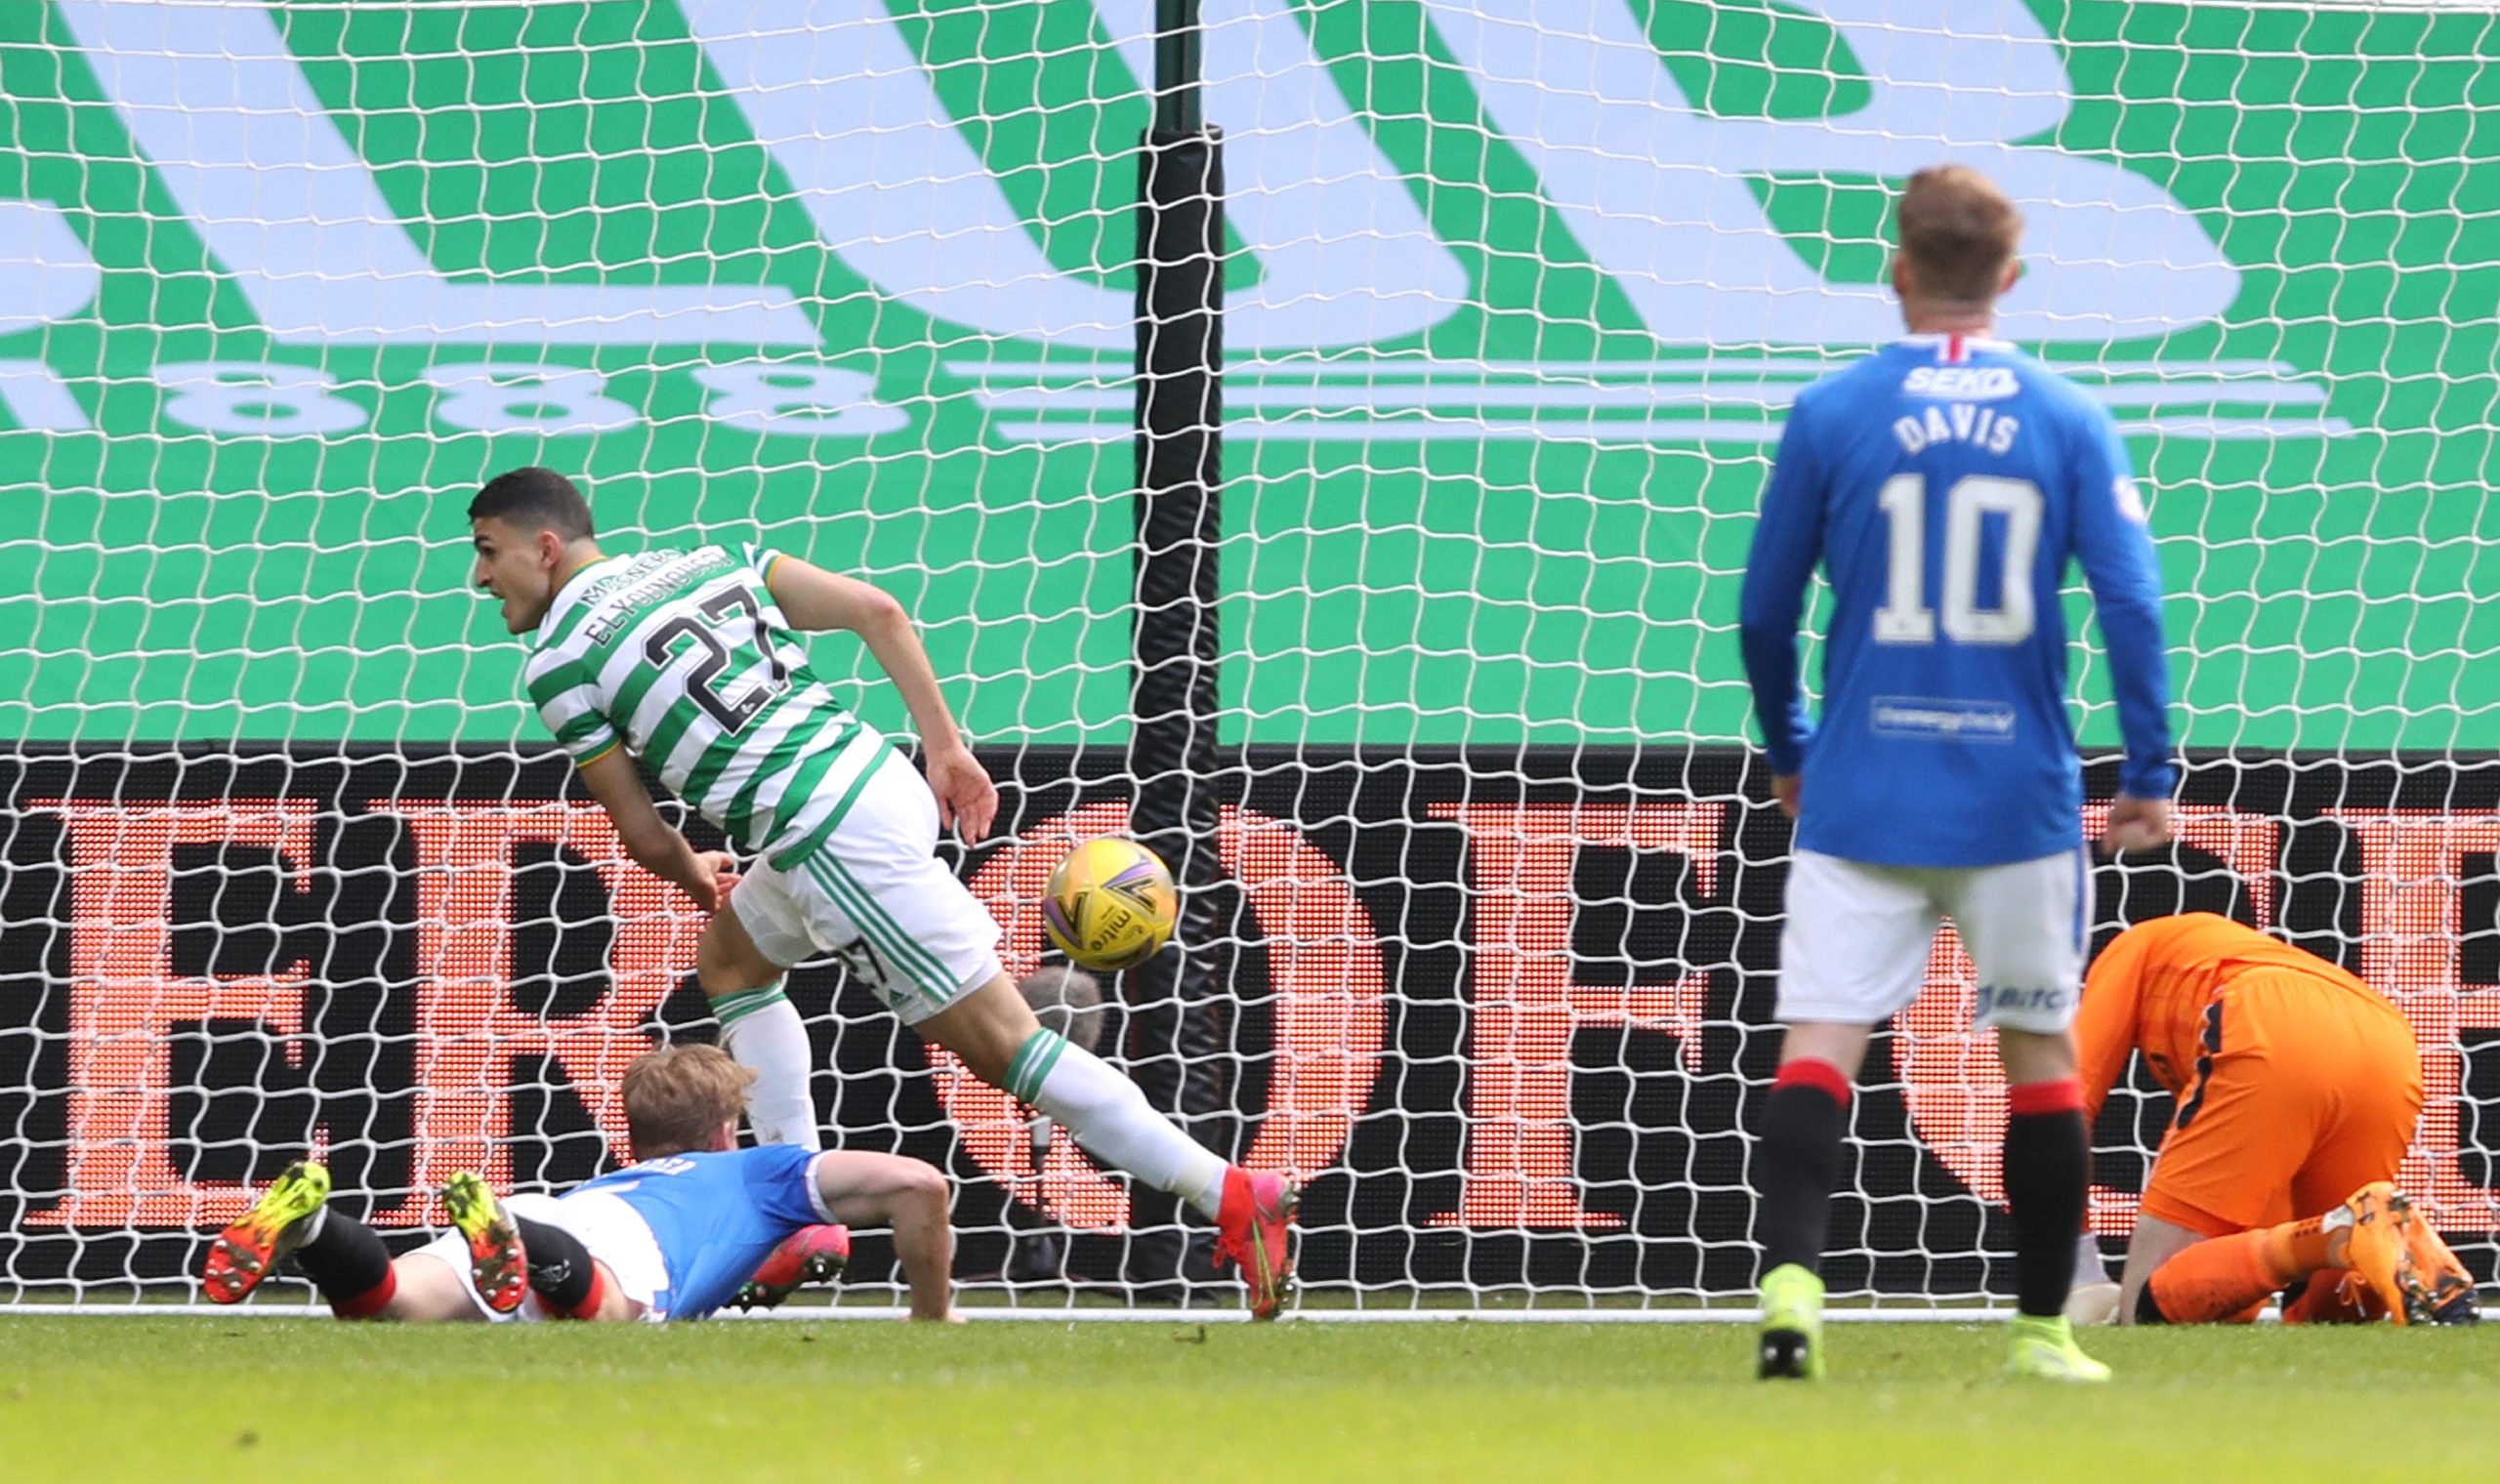 Big-game hero Moi Elyounoussi strikes again; Celtic facing increasing calls to make move permanent